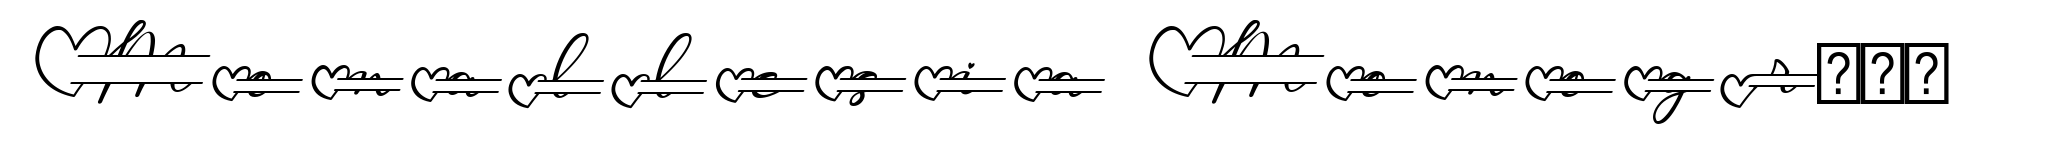 Monallesia Monogram Italic image